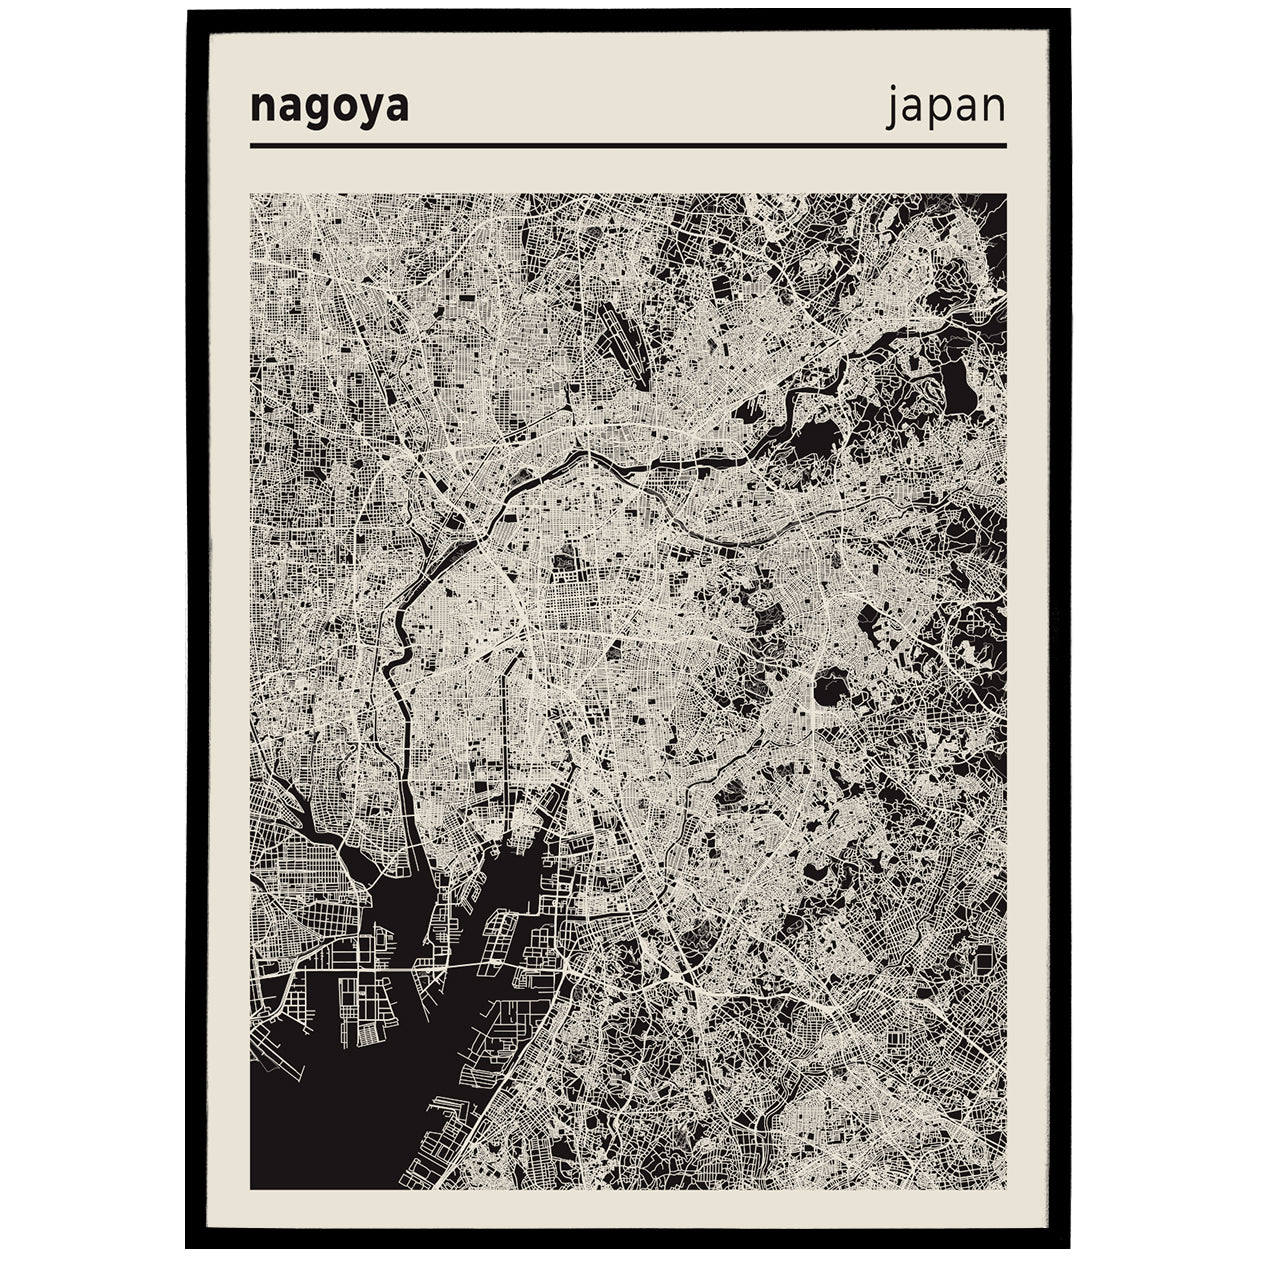 Nagoya, Japan - City Poster - Map Art Print